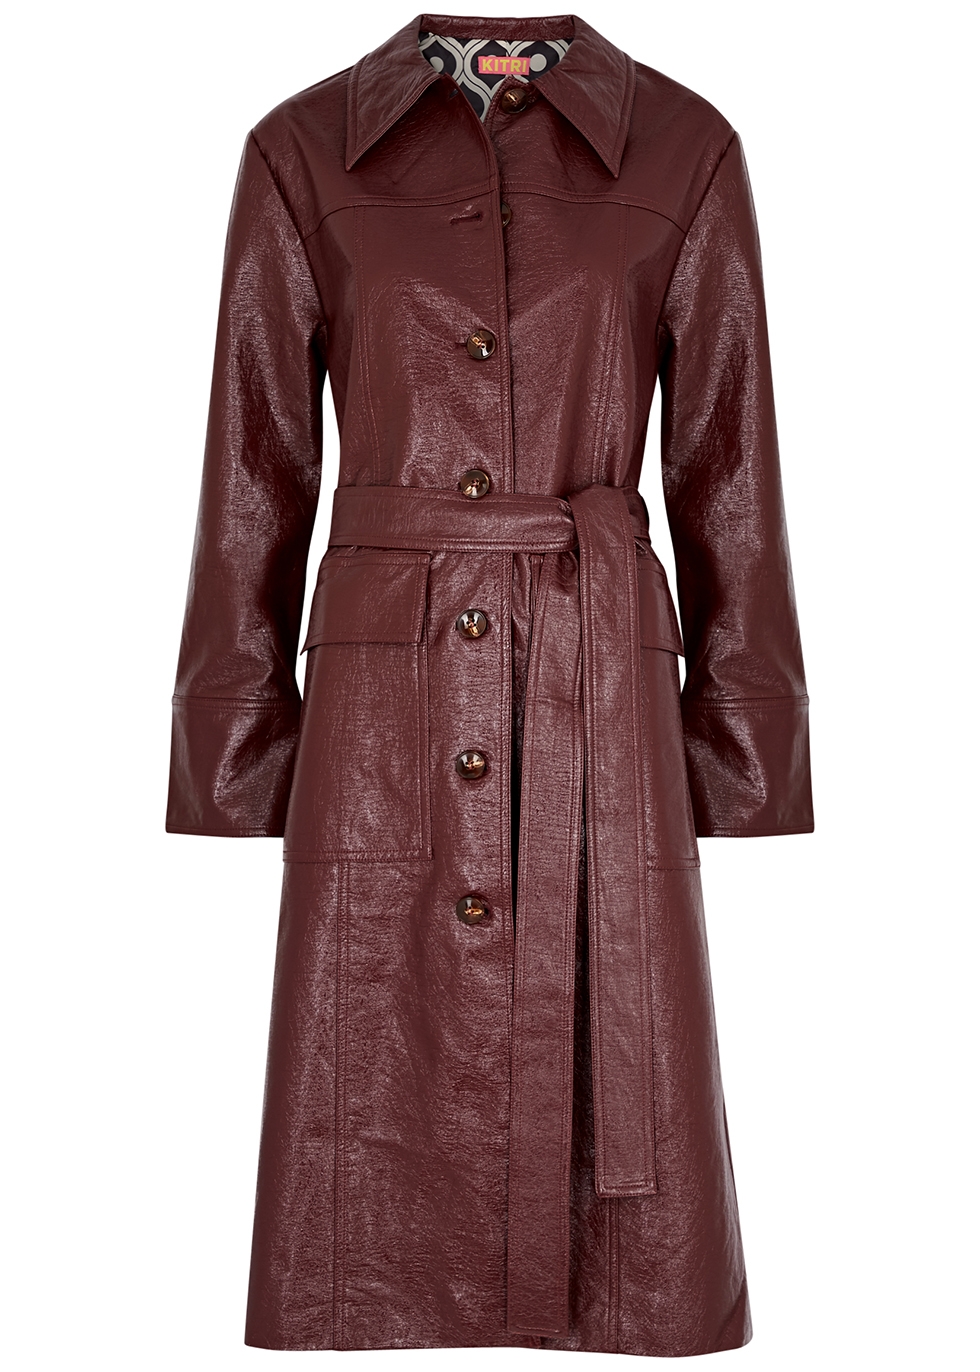 Dominique burgundy belted vinyl coat